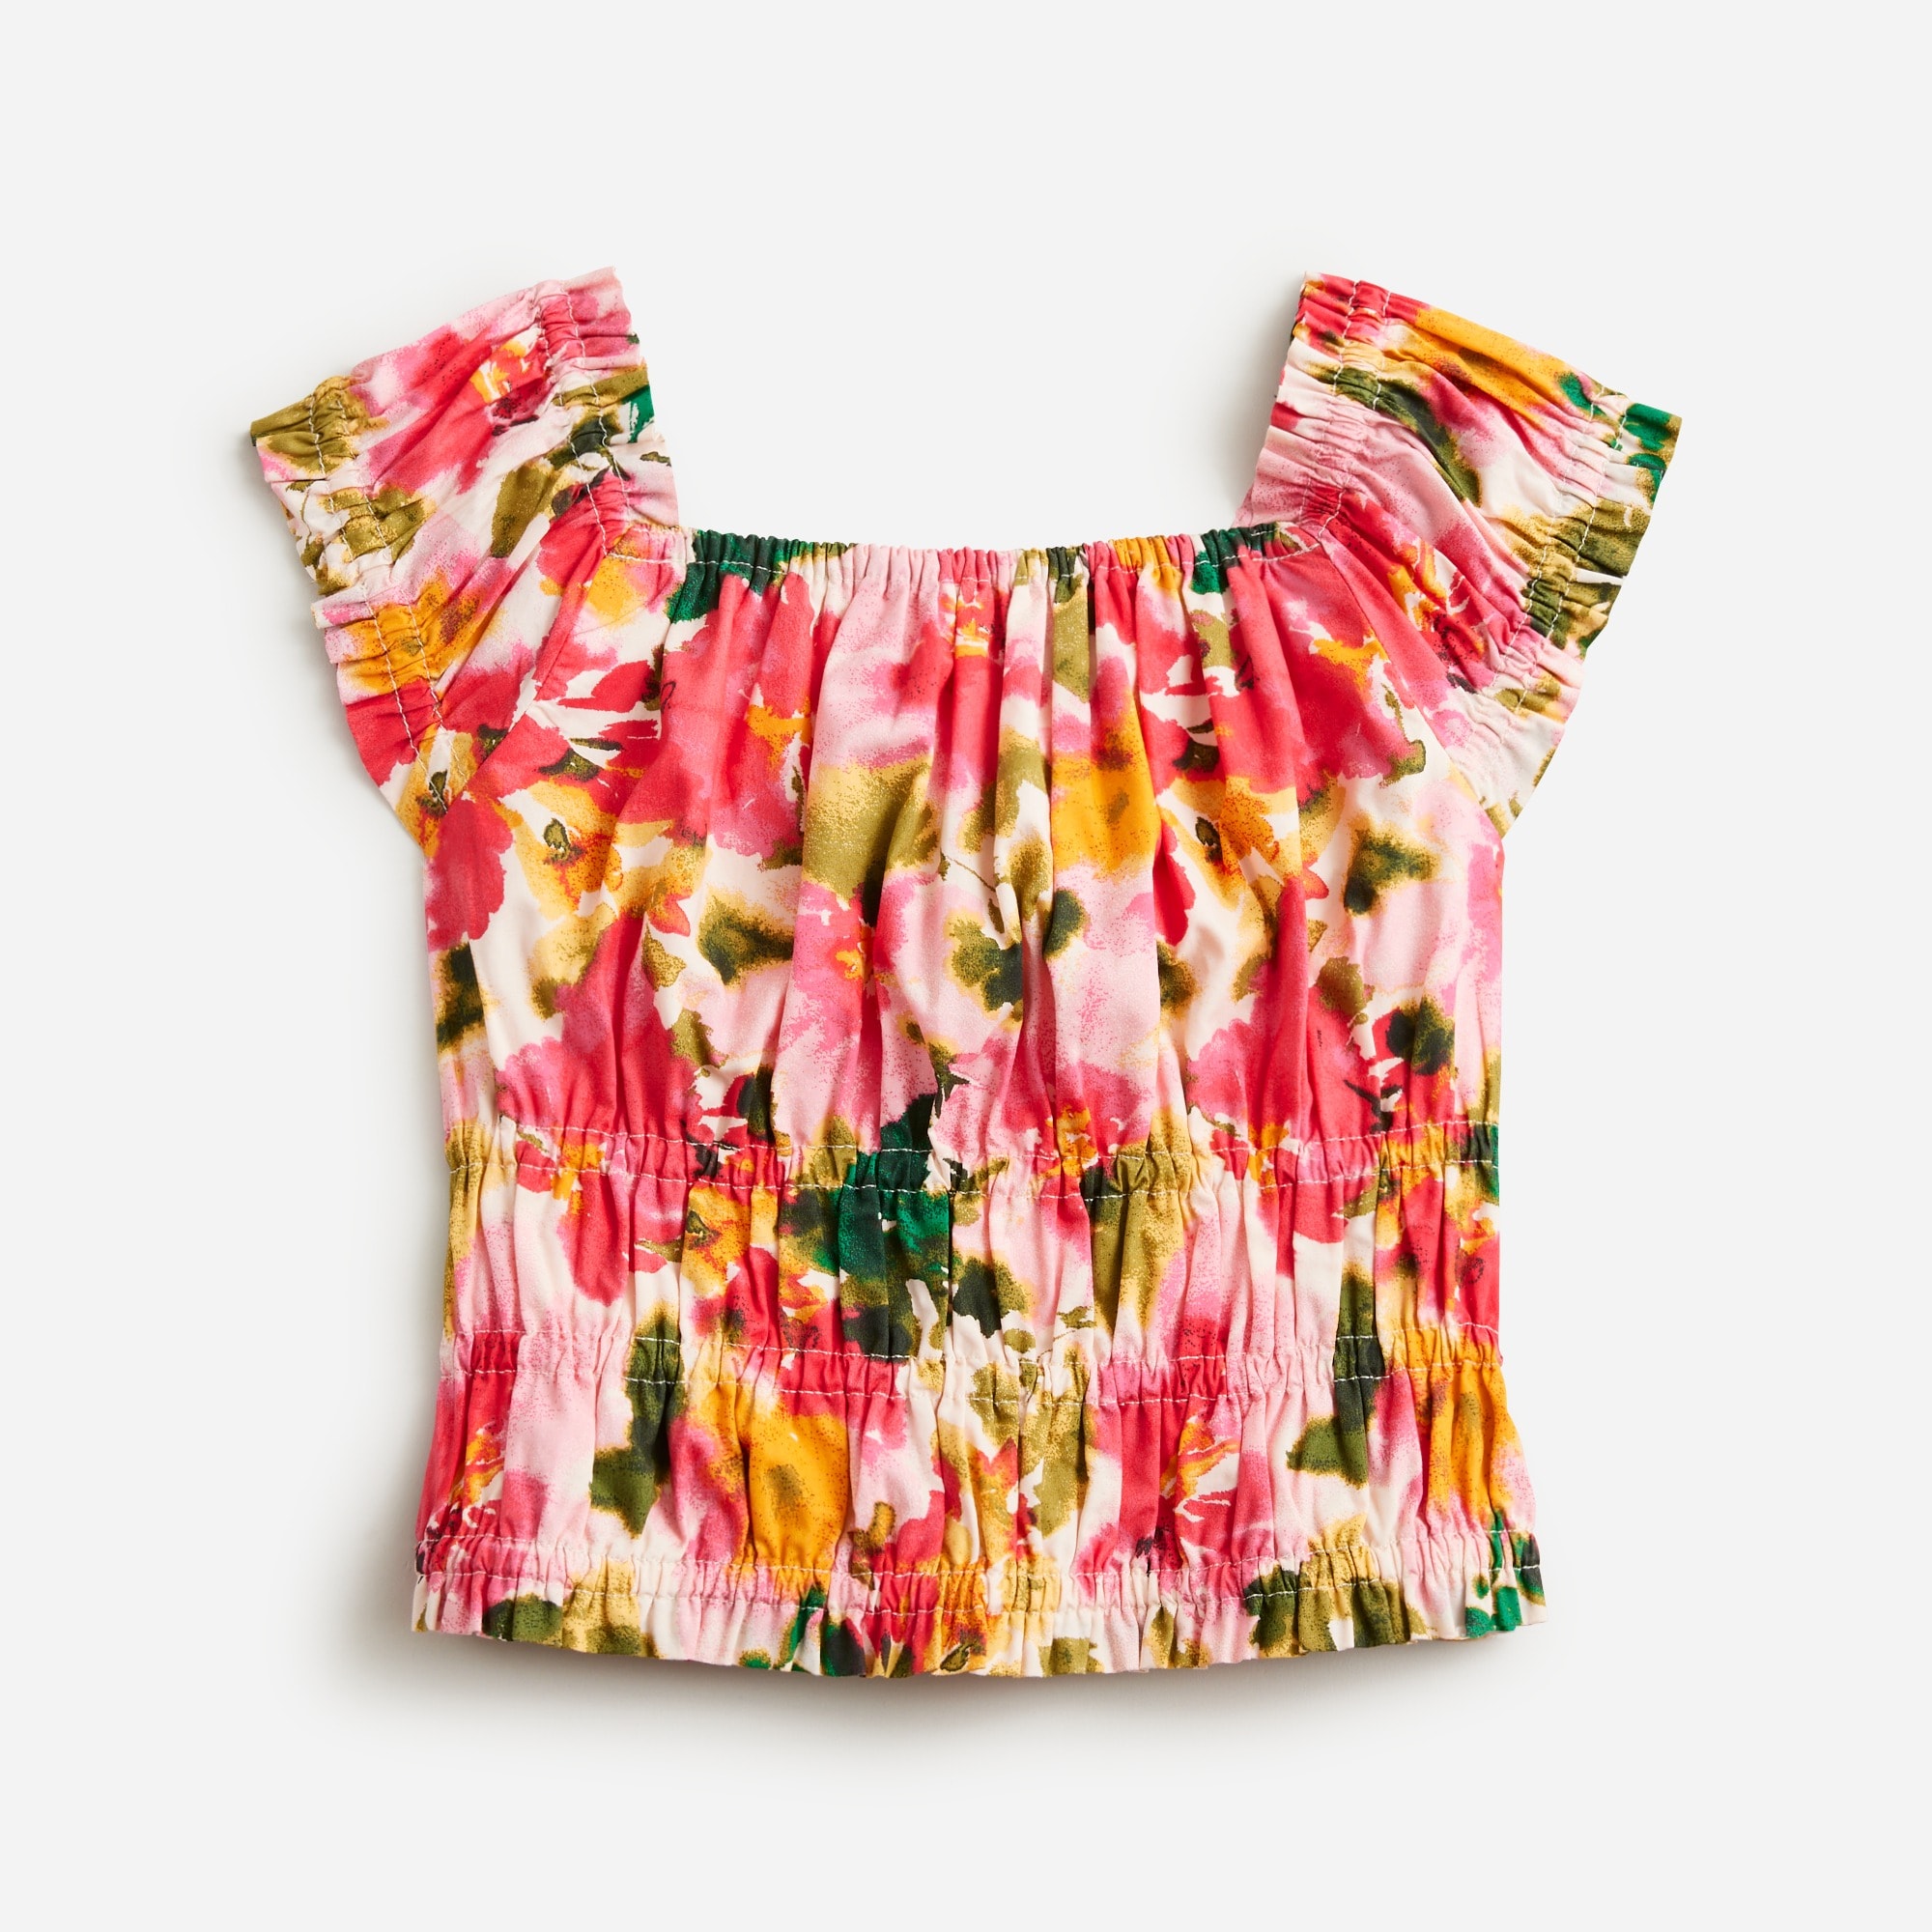  Girls' smocked crop top in cotton poplin floral